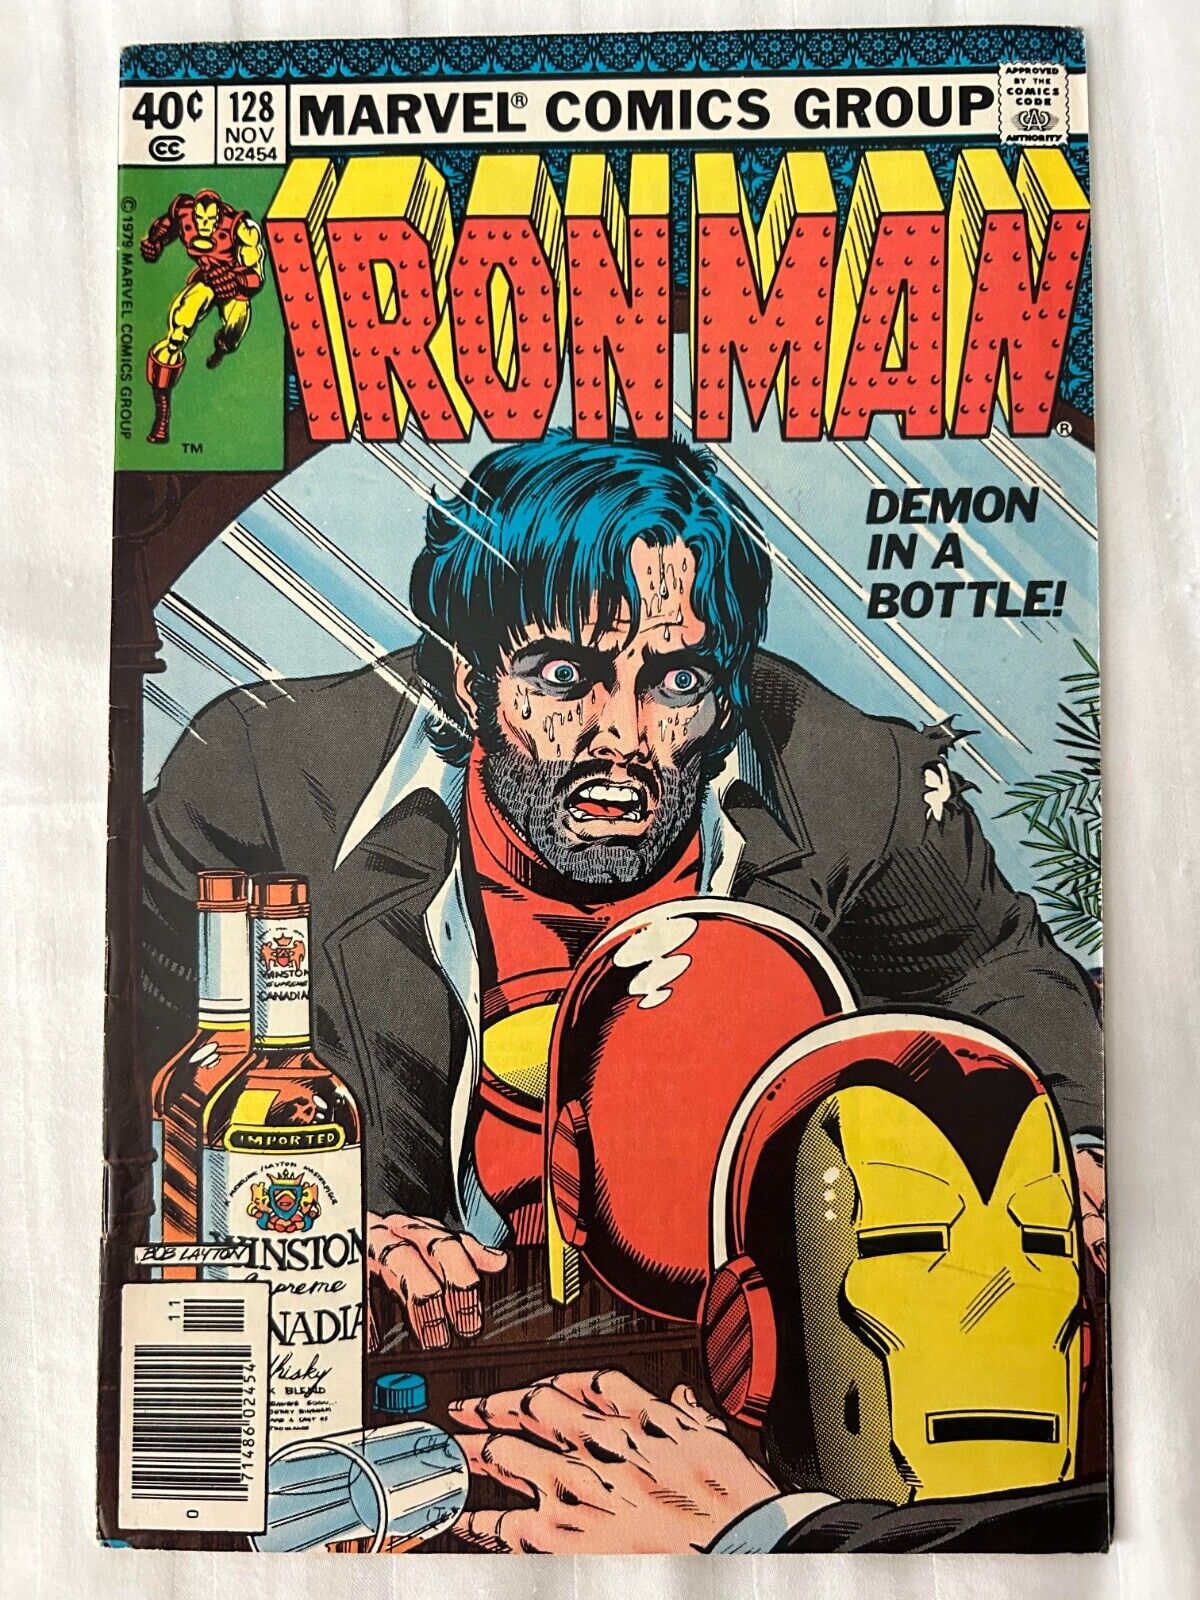 IRON MAN #128 comic (1979 Marvel) Demon in a Bottle